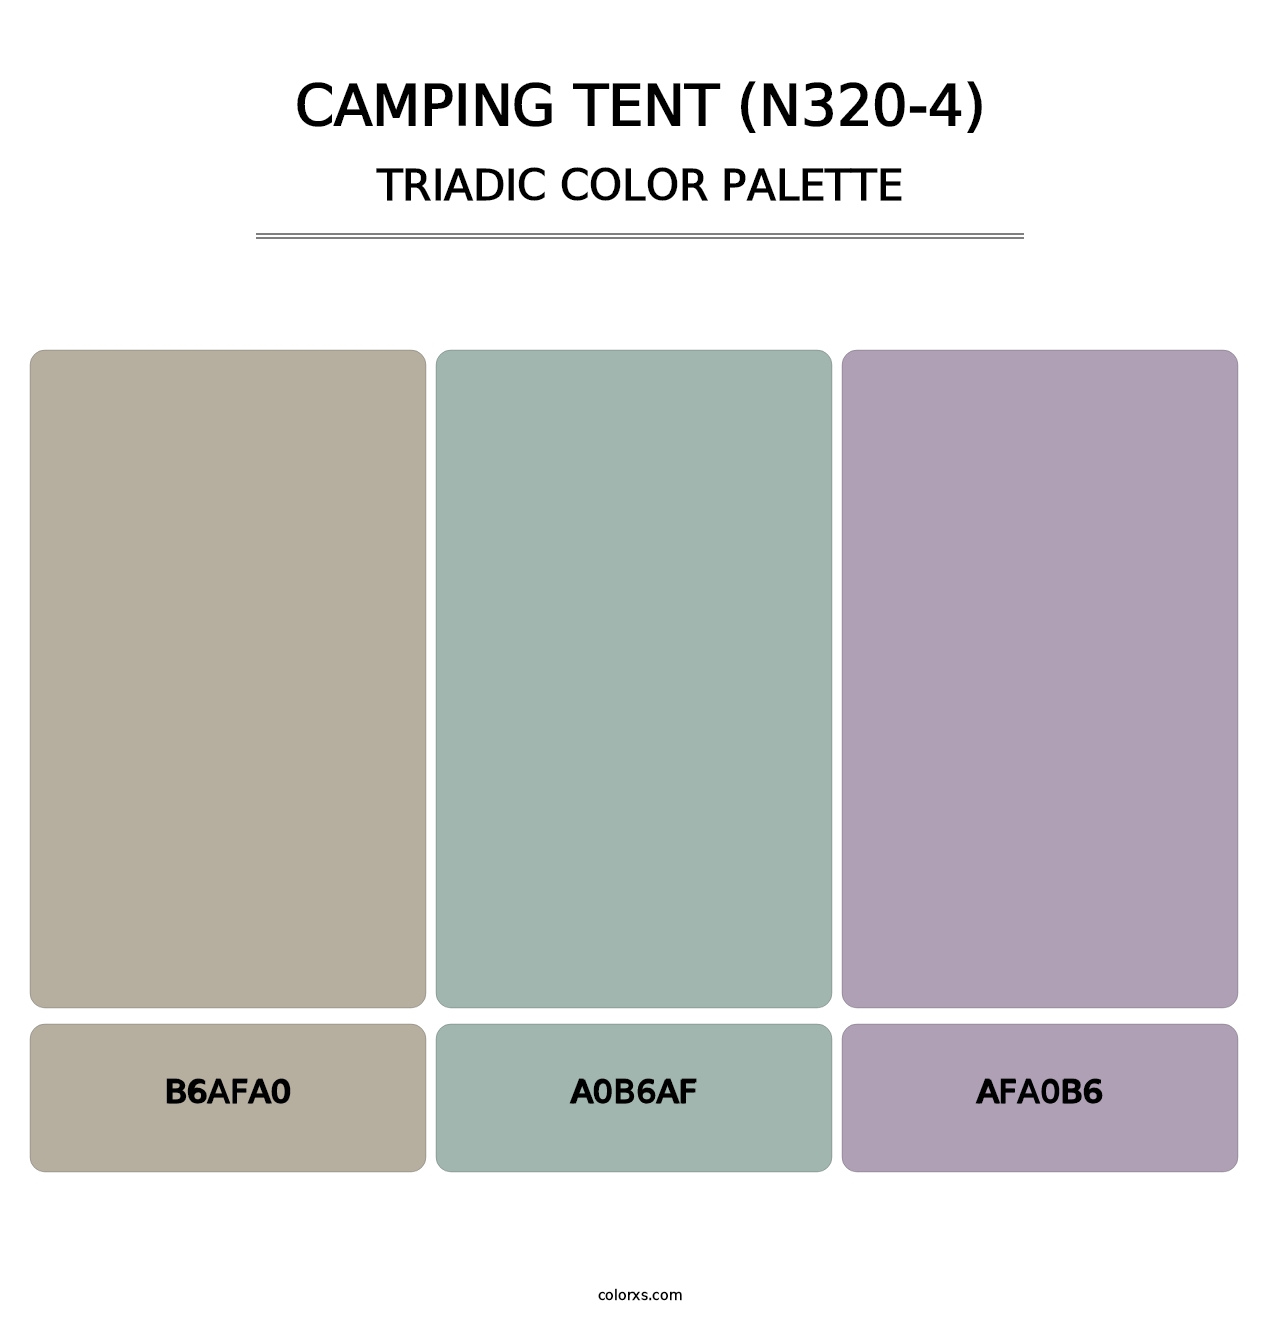 Camping Tent (N320-4) - Triadic Color Palette